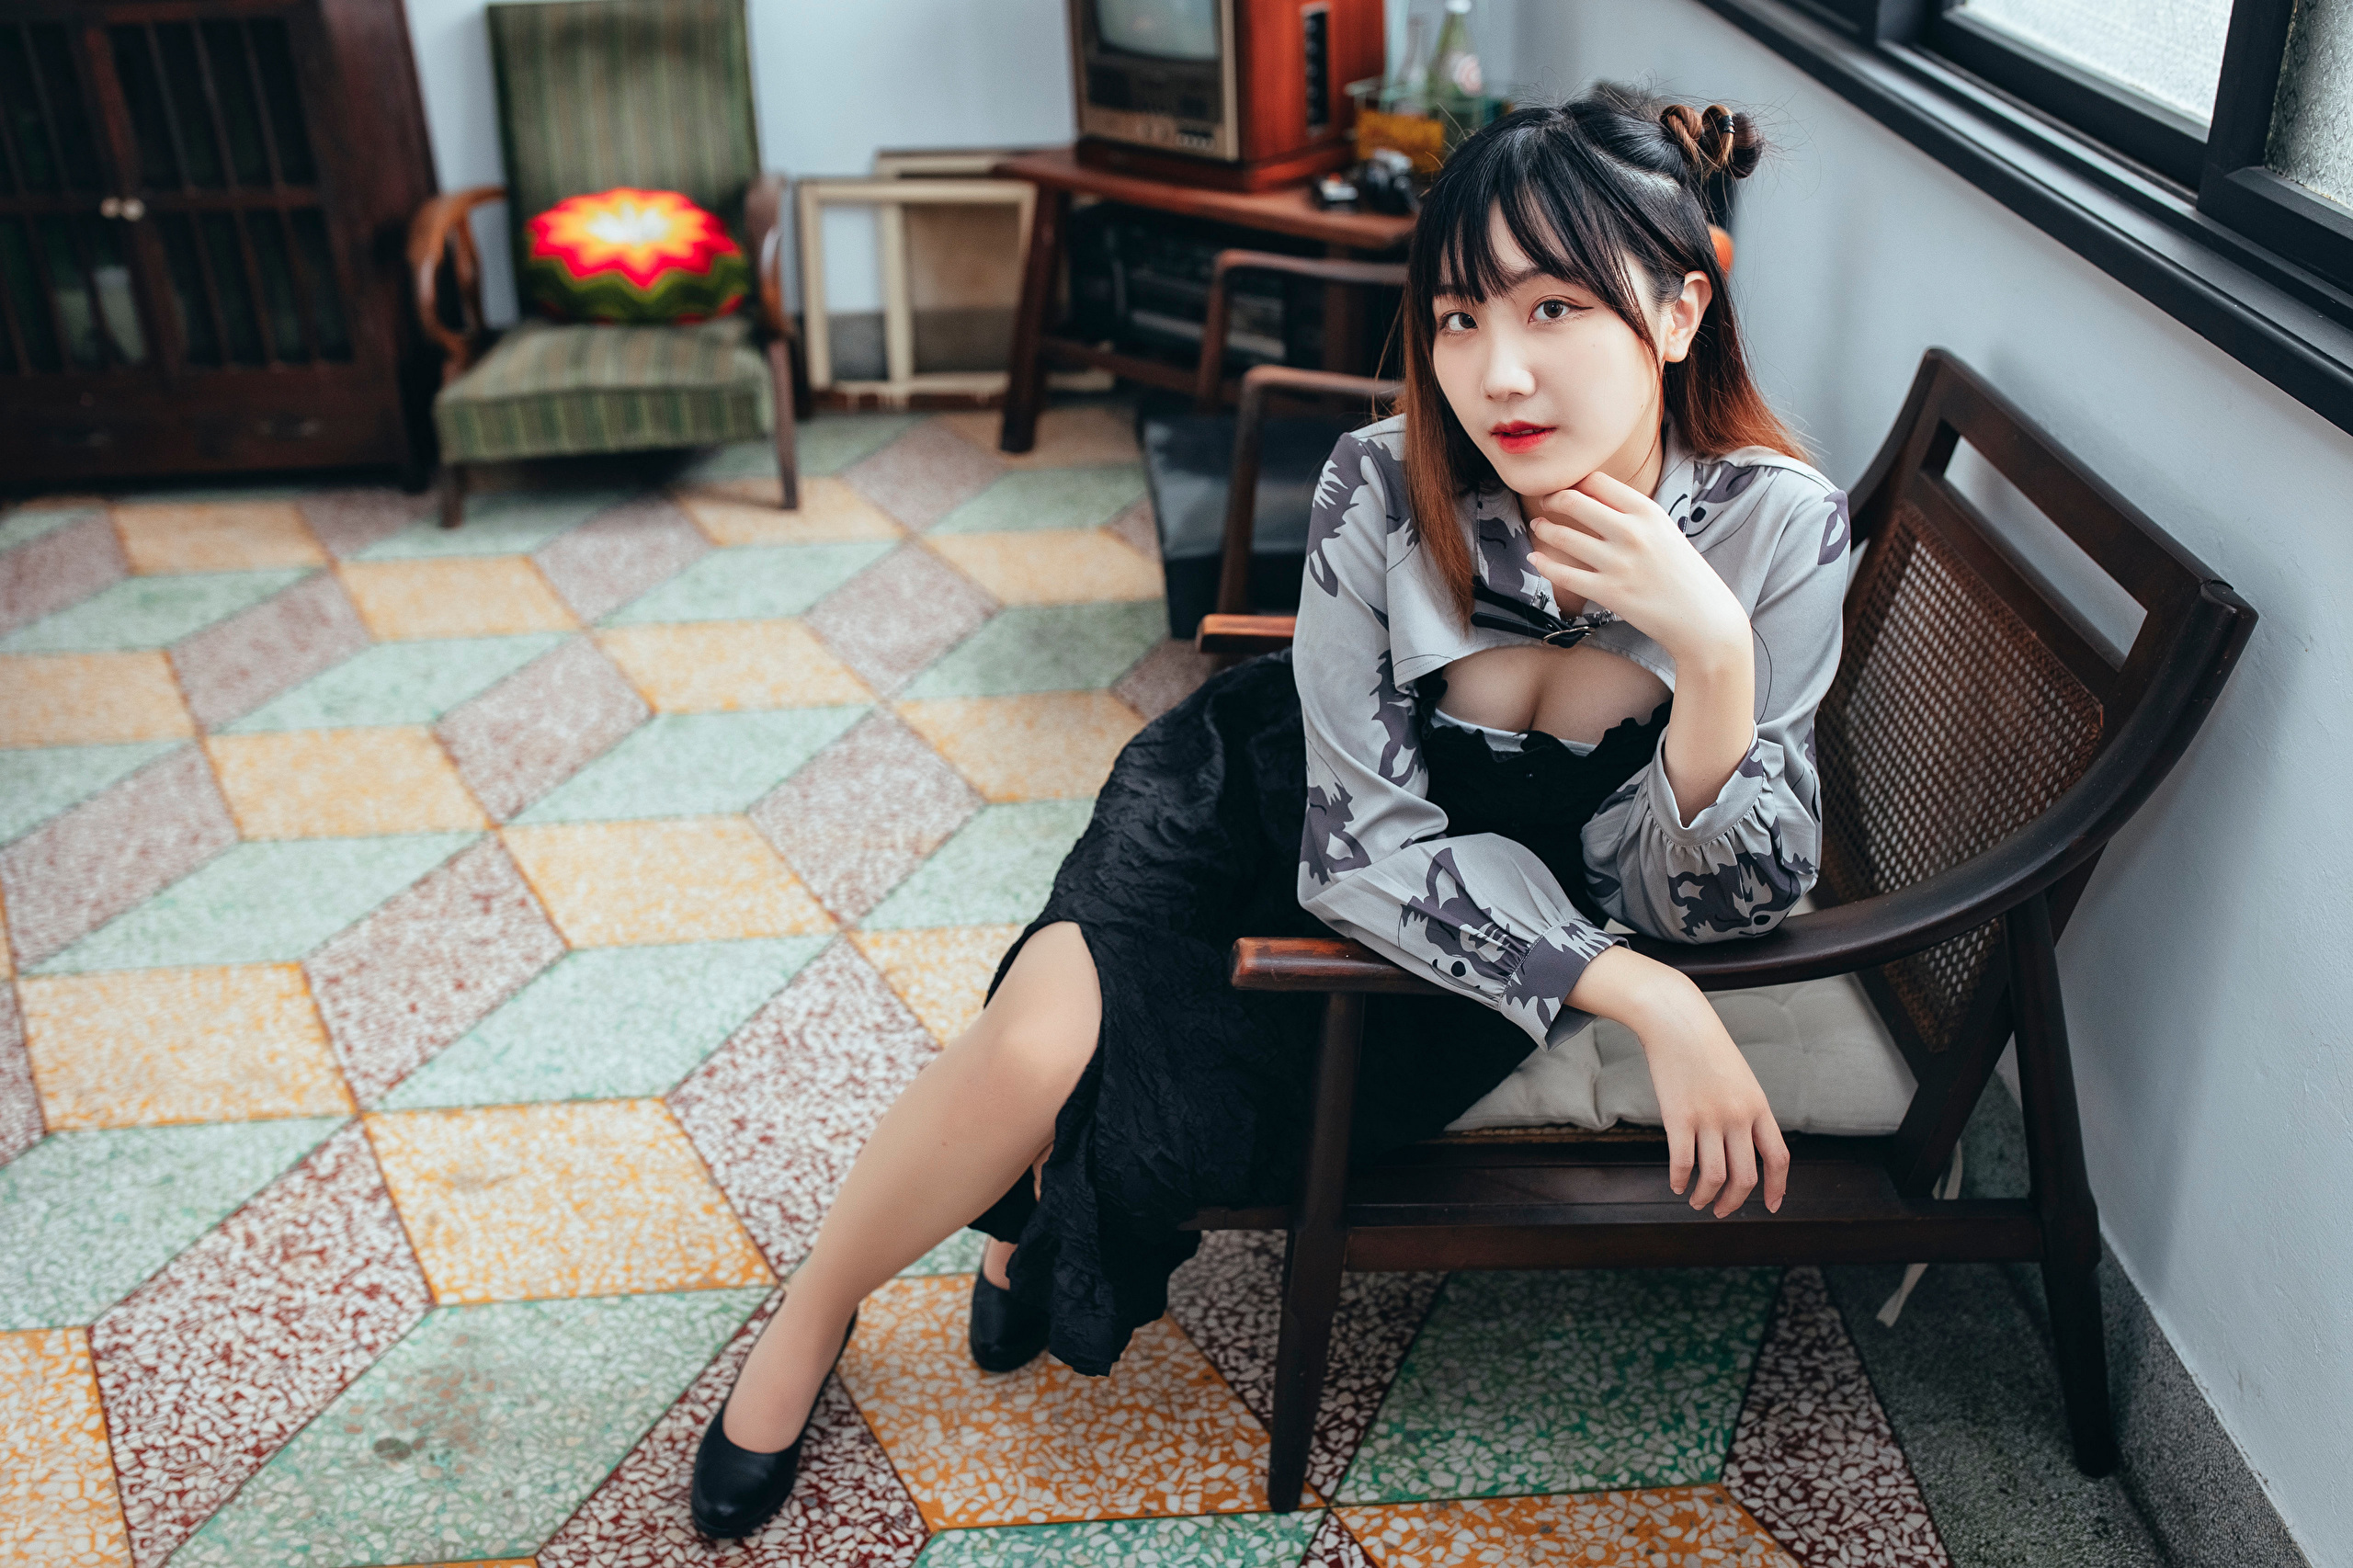 Asian Model Women Long Hair Dark Hair Sitting Chair Window Depth Of Field Tiled Floor Black Dress Bl 2560x1706